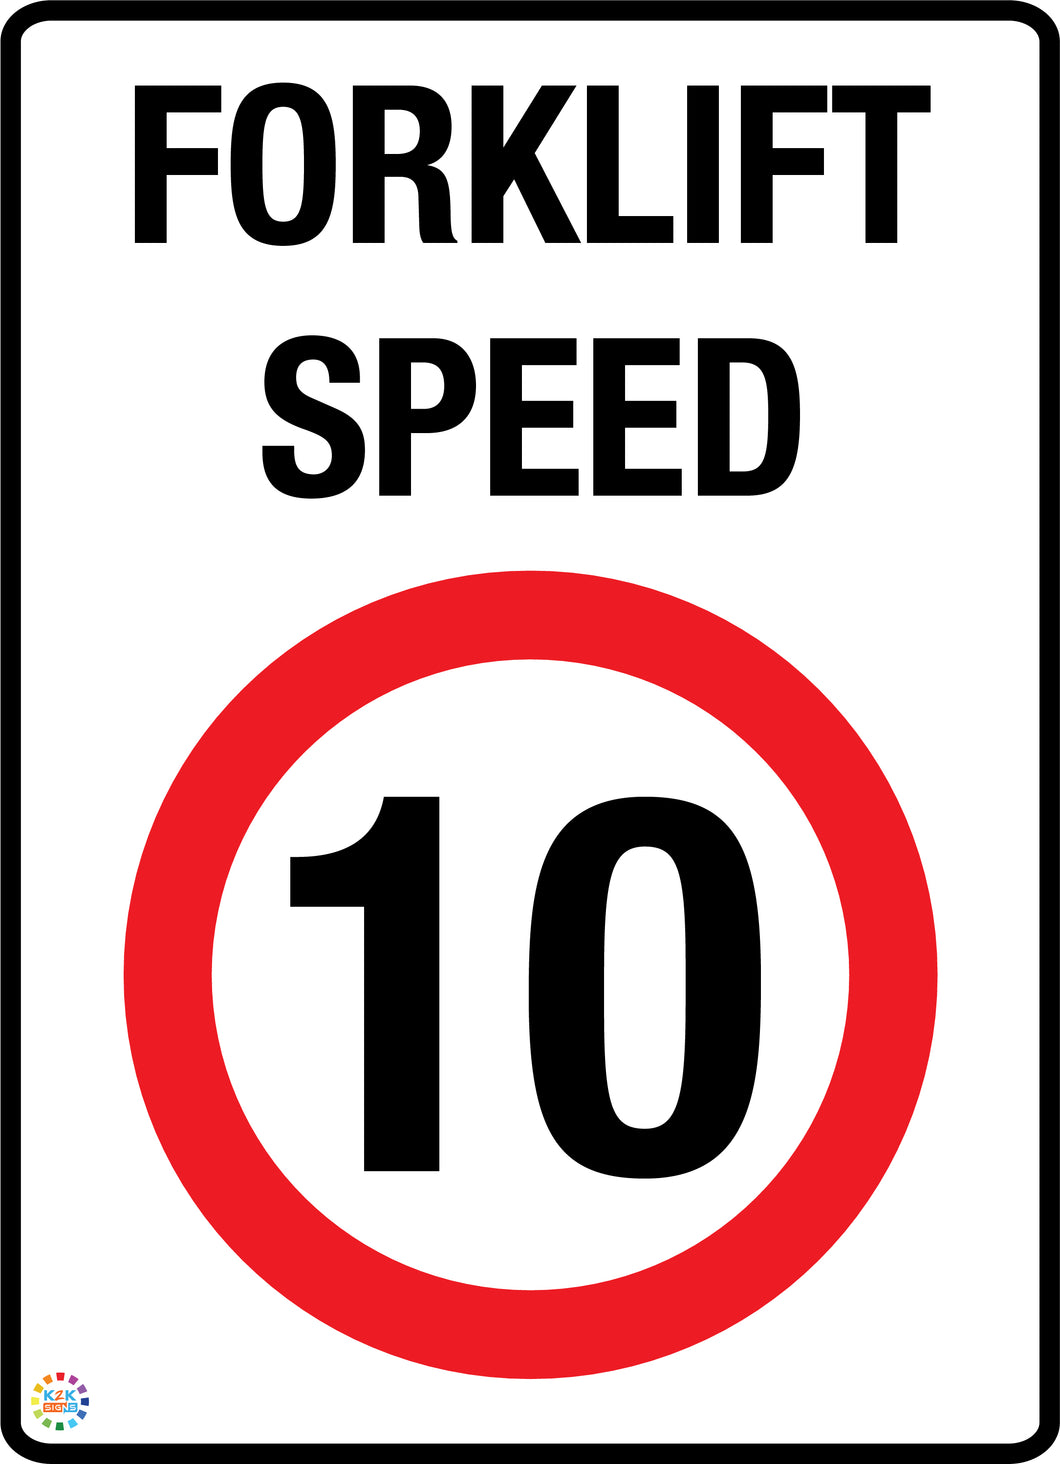 Forklift Speed Limit 10 Kph Sign